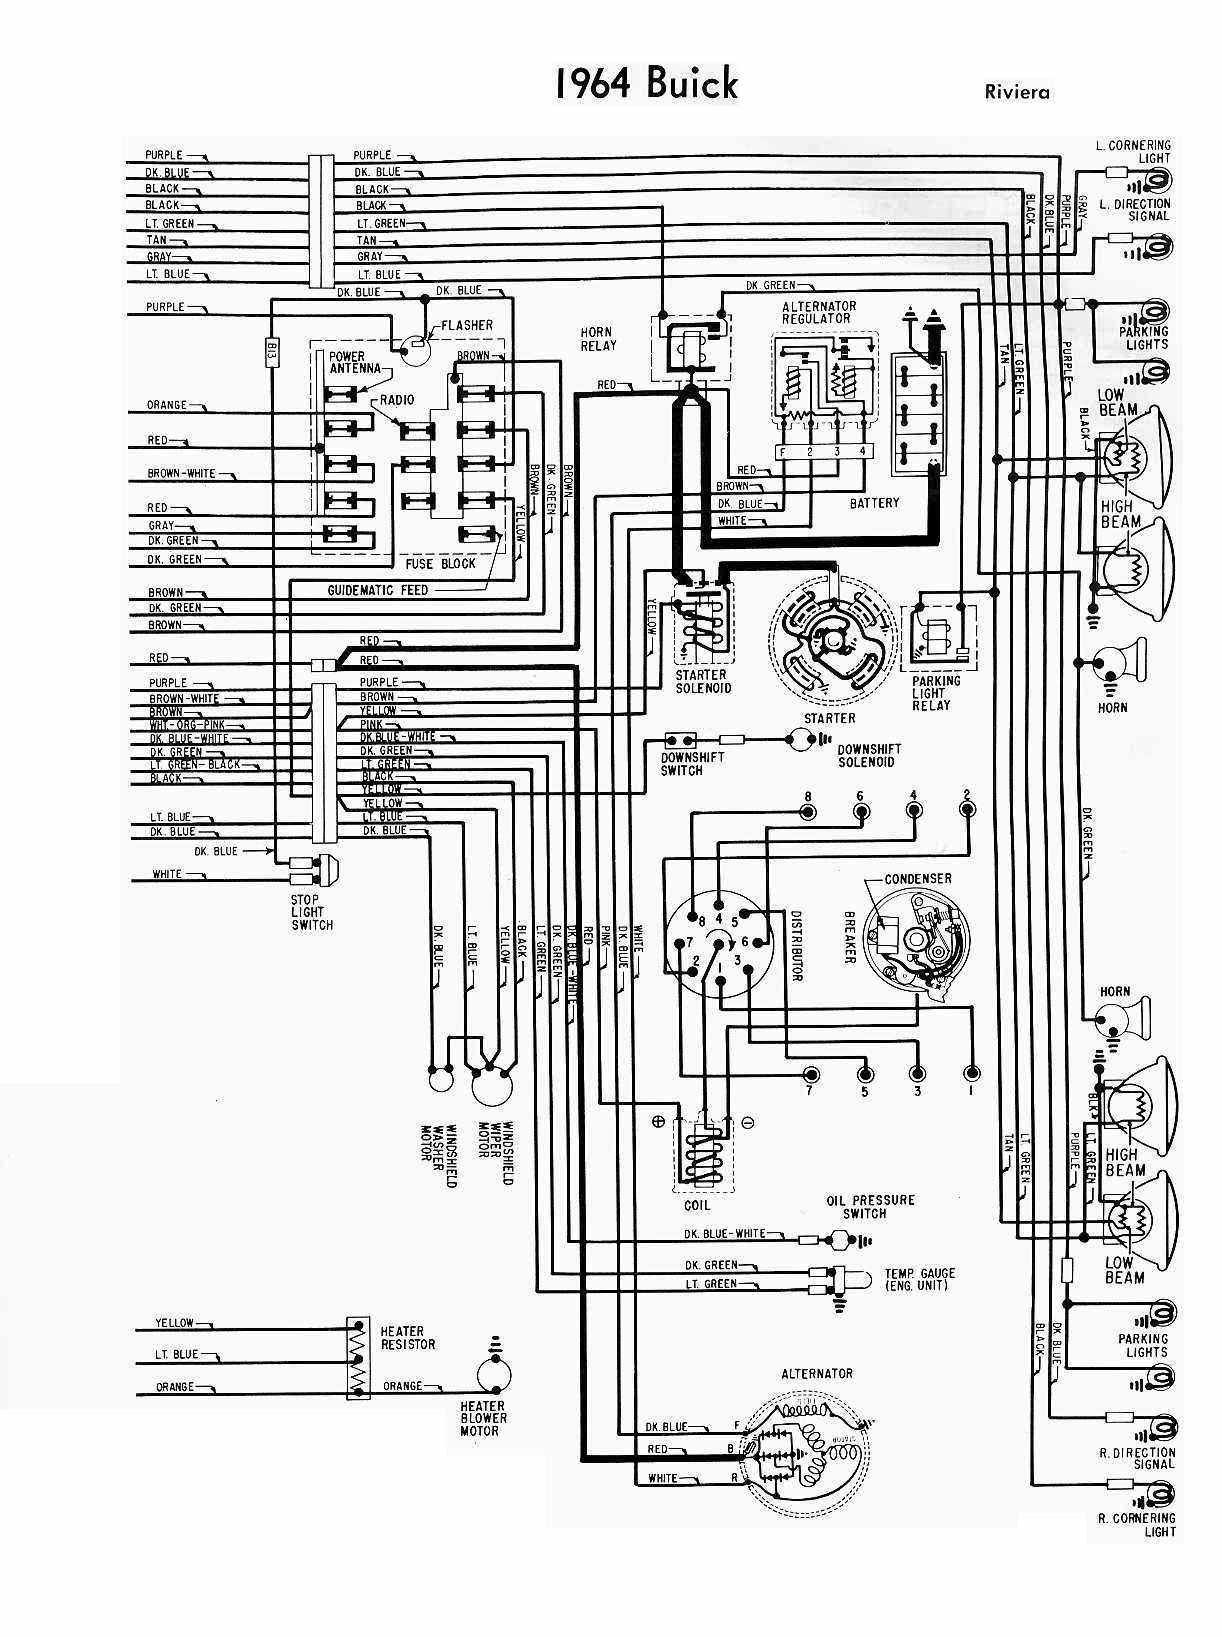 2000 Buick Lesabre Wiring Diagram Buick Car Manuals Wiring Diagrams Pdf & Fault Codes Of 2000 Buick Lesabre Wiring Diagram